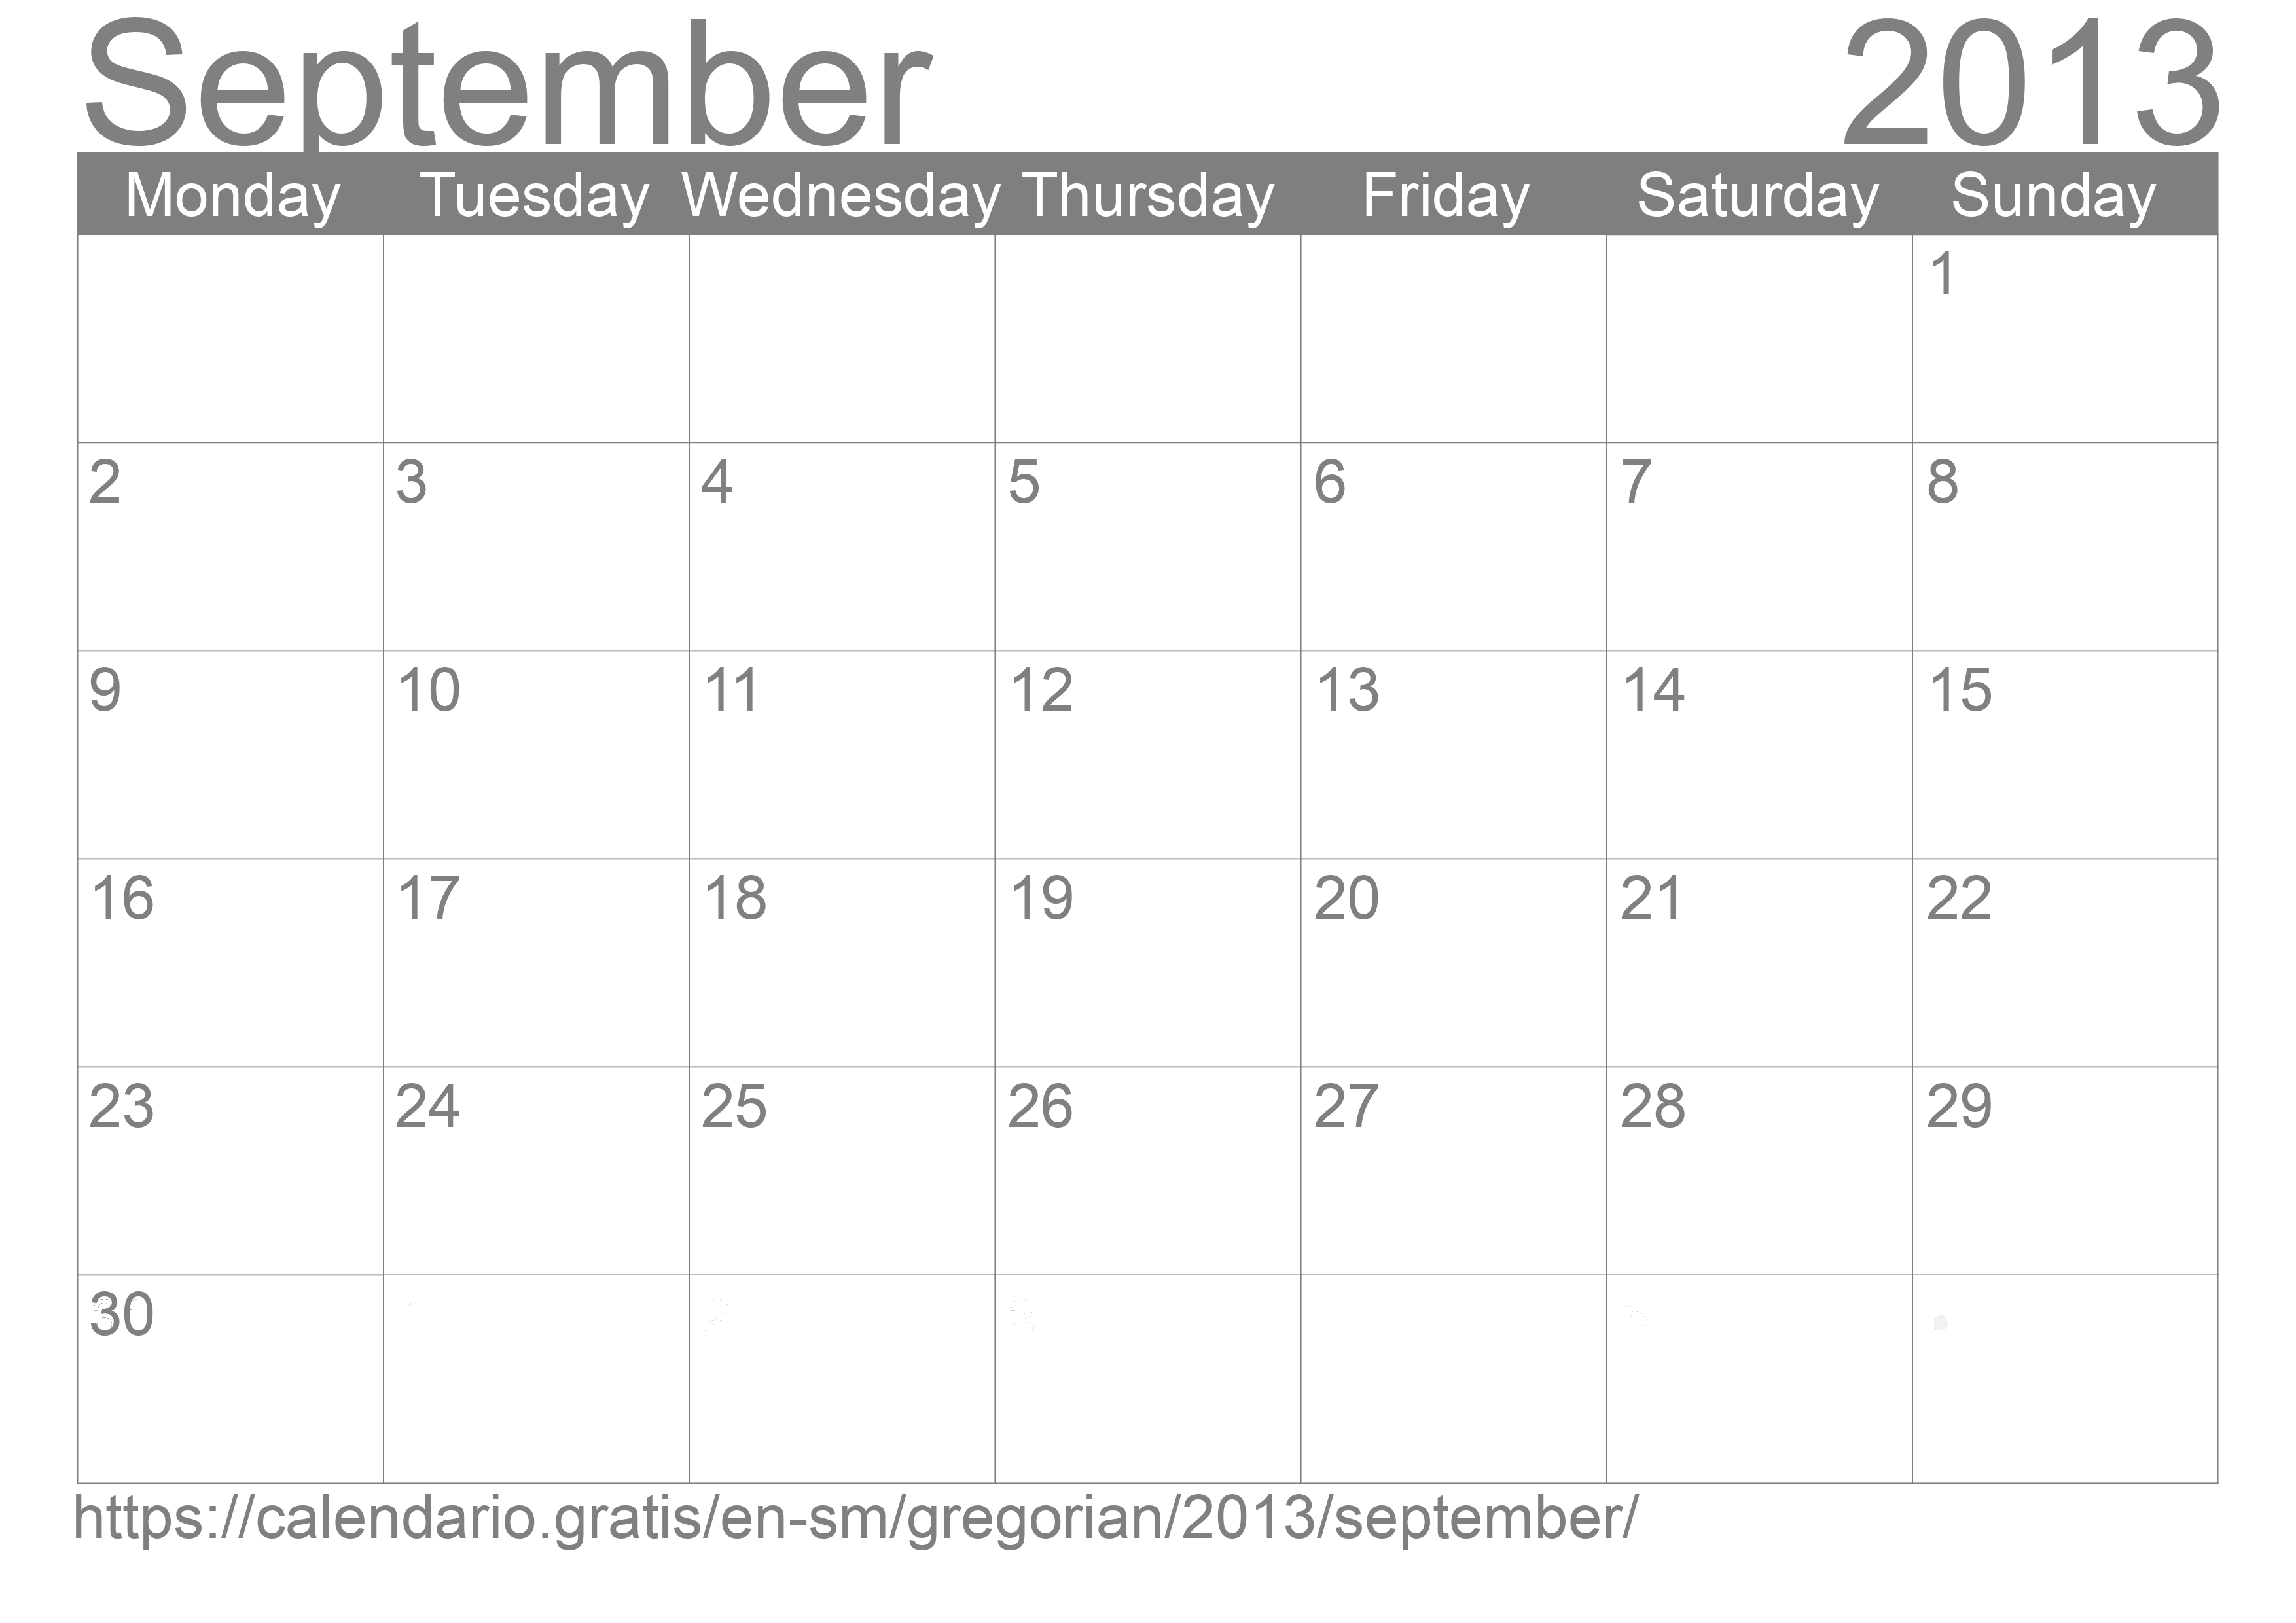 Calendar September 2013 to print